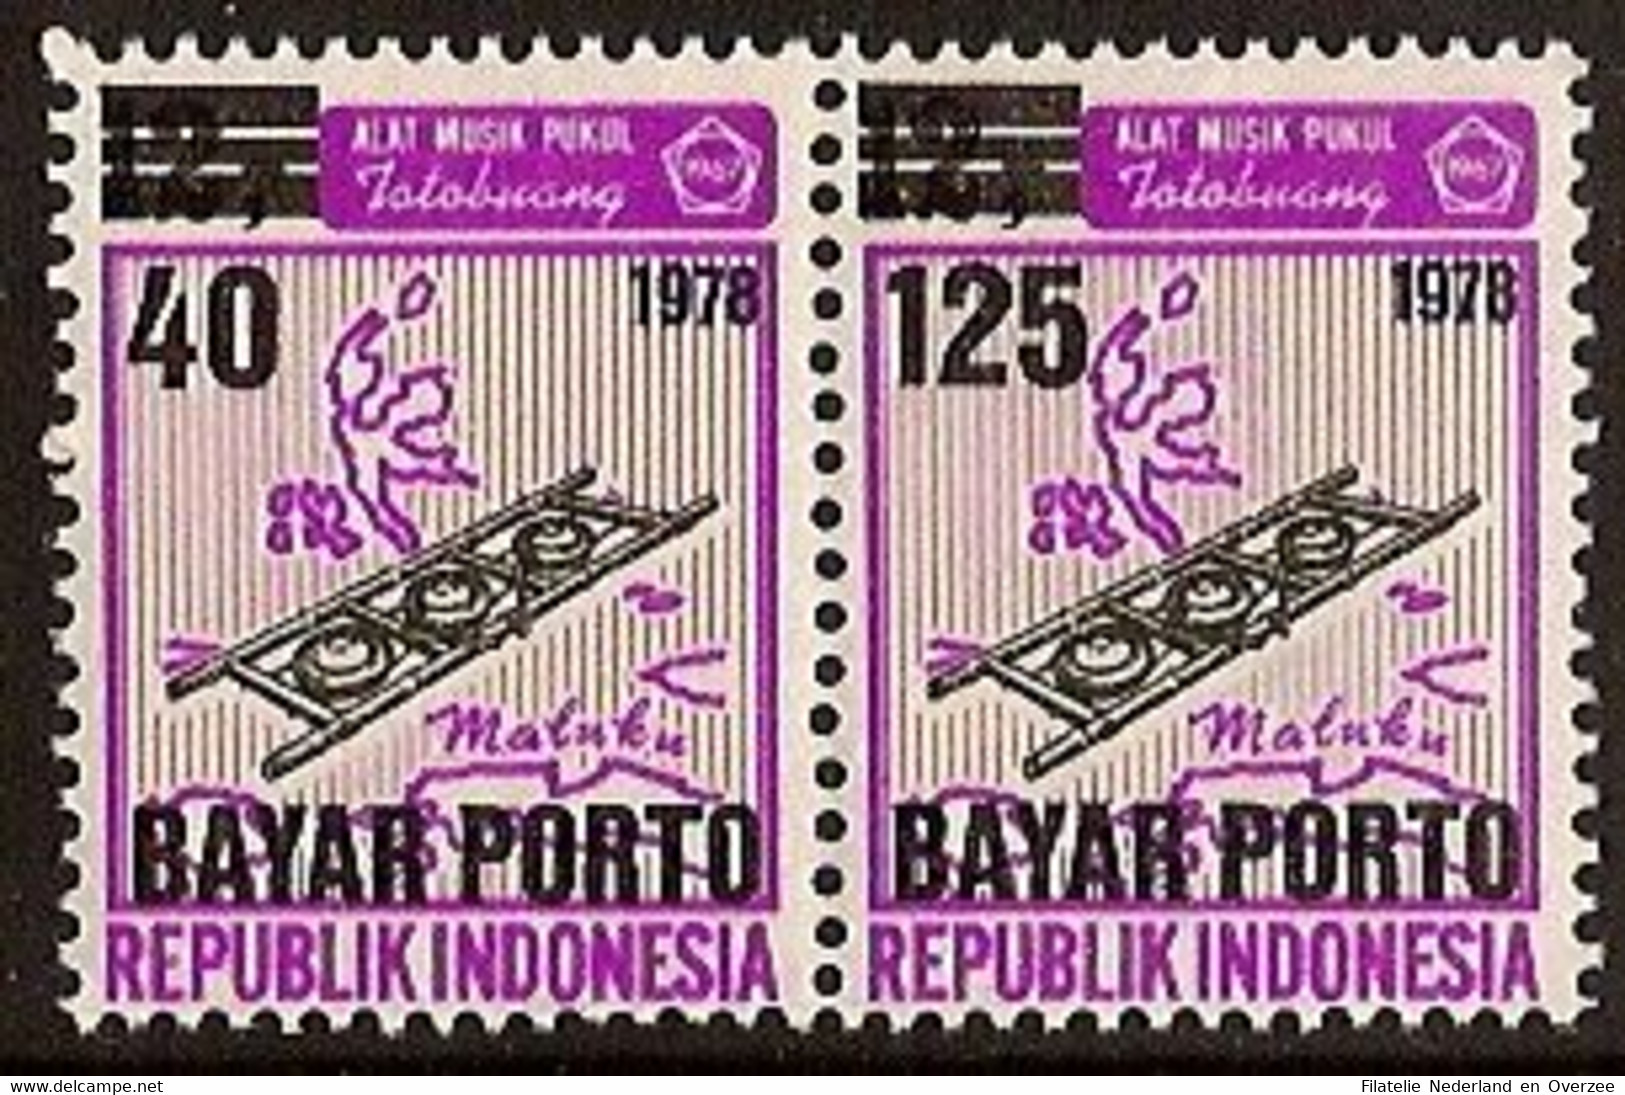 Indonesië / Indonesia 1978 Port 73+75A Postfris/MNH Tax, Due Stamp - Indonesië